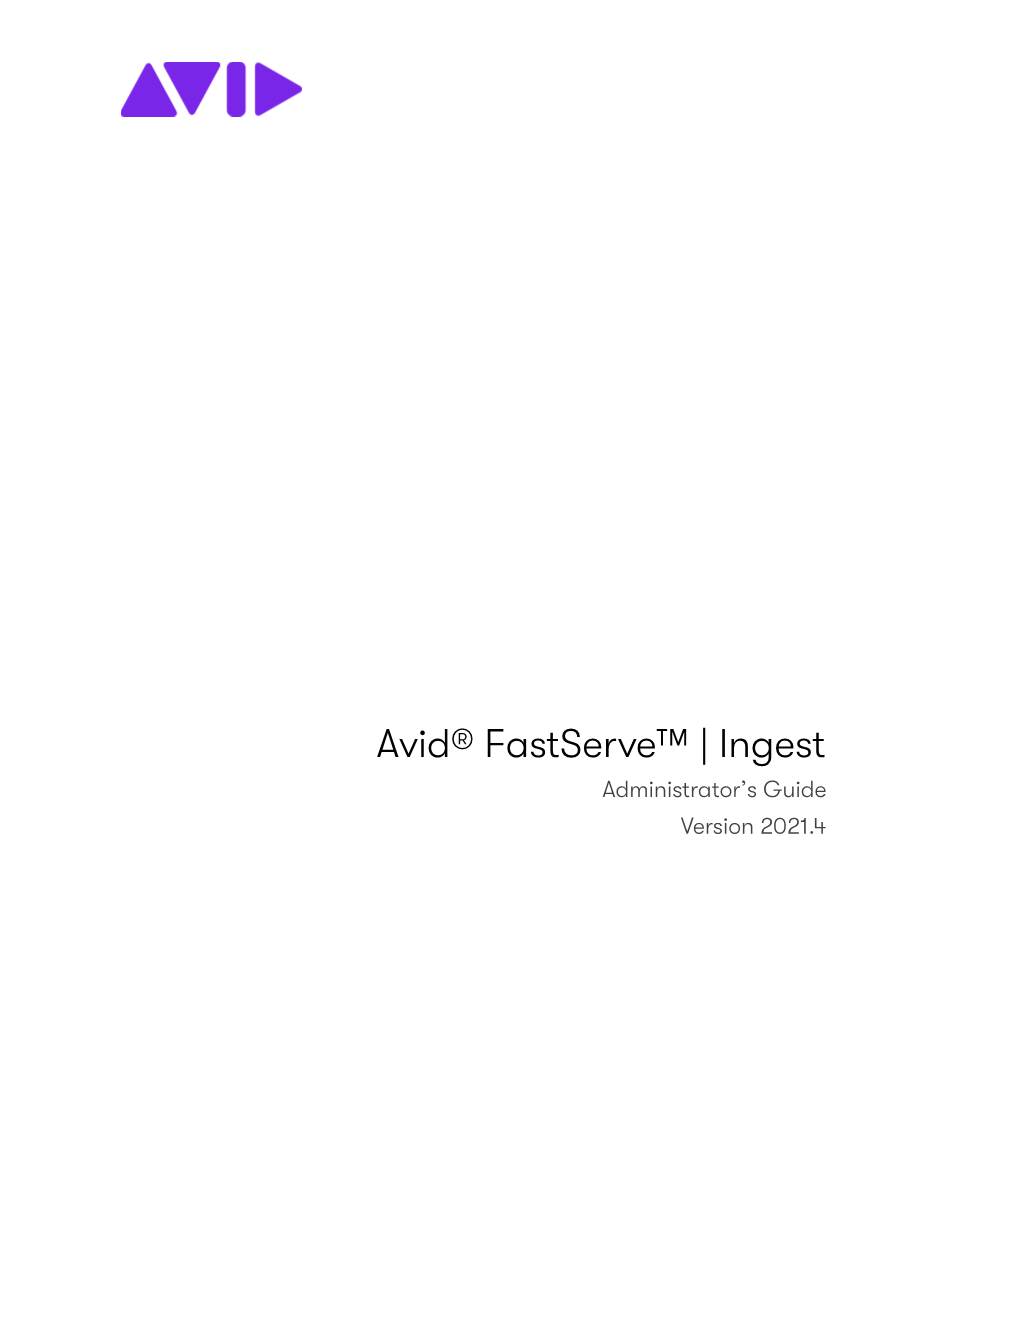 Avid Fastserve | Ingest Administrator's Guide V2021.4